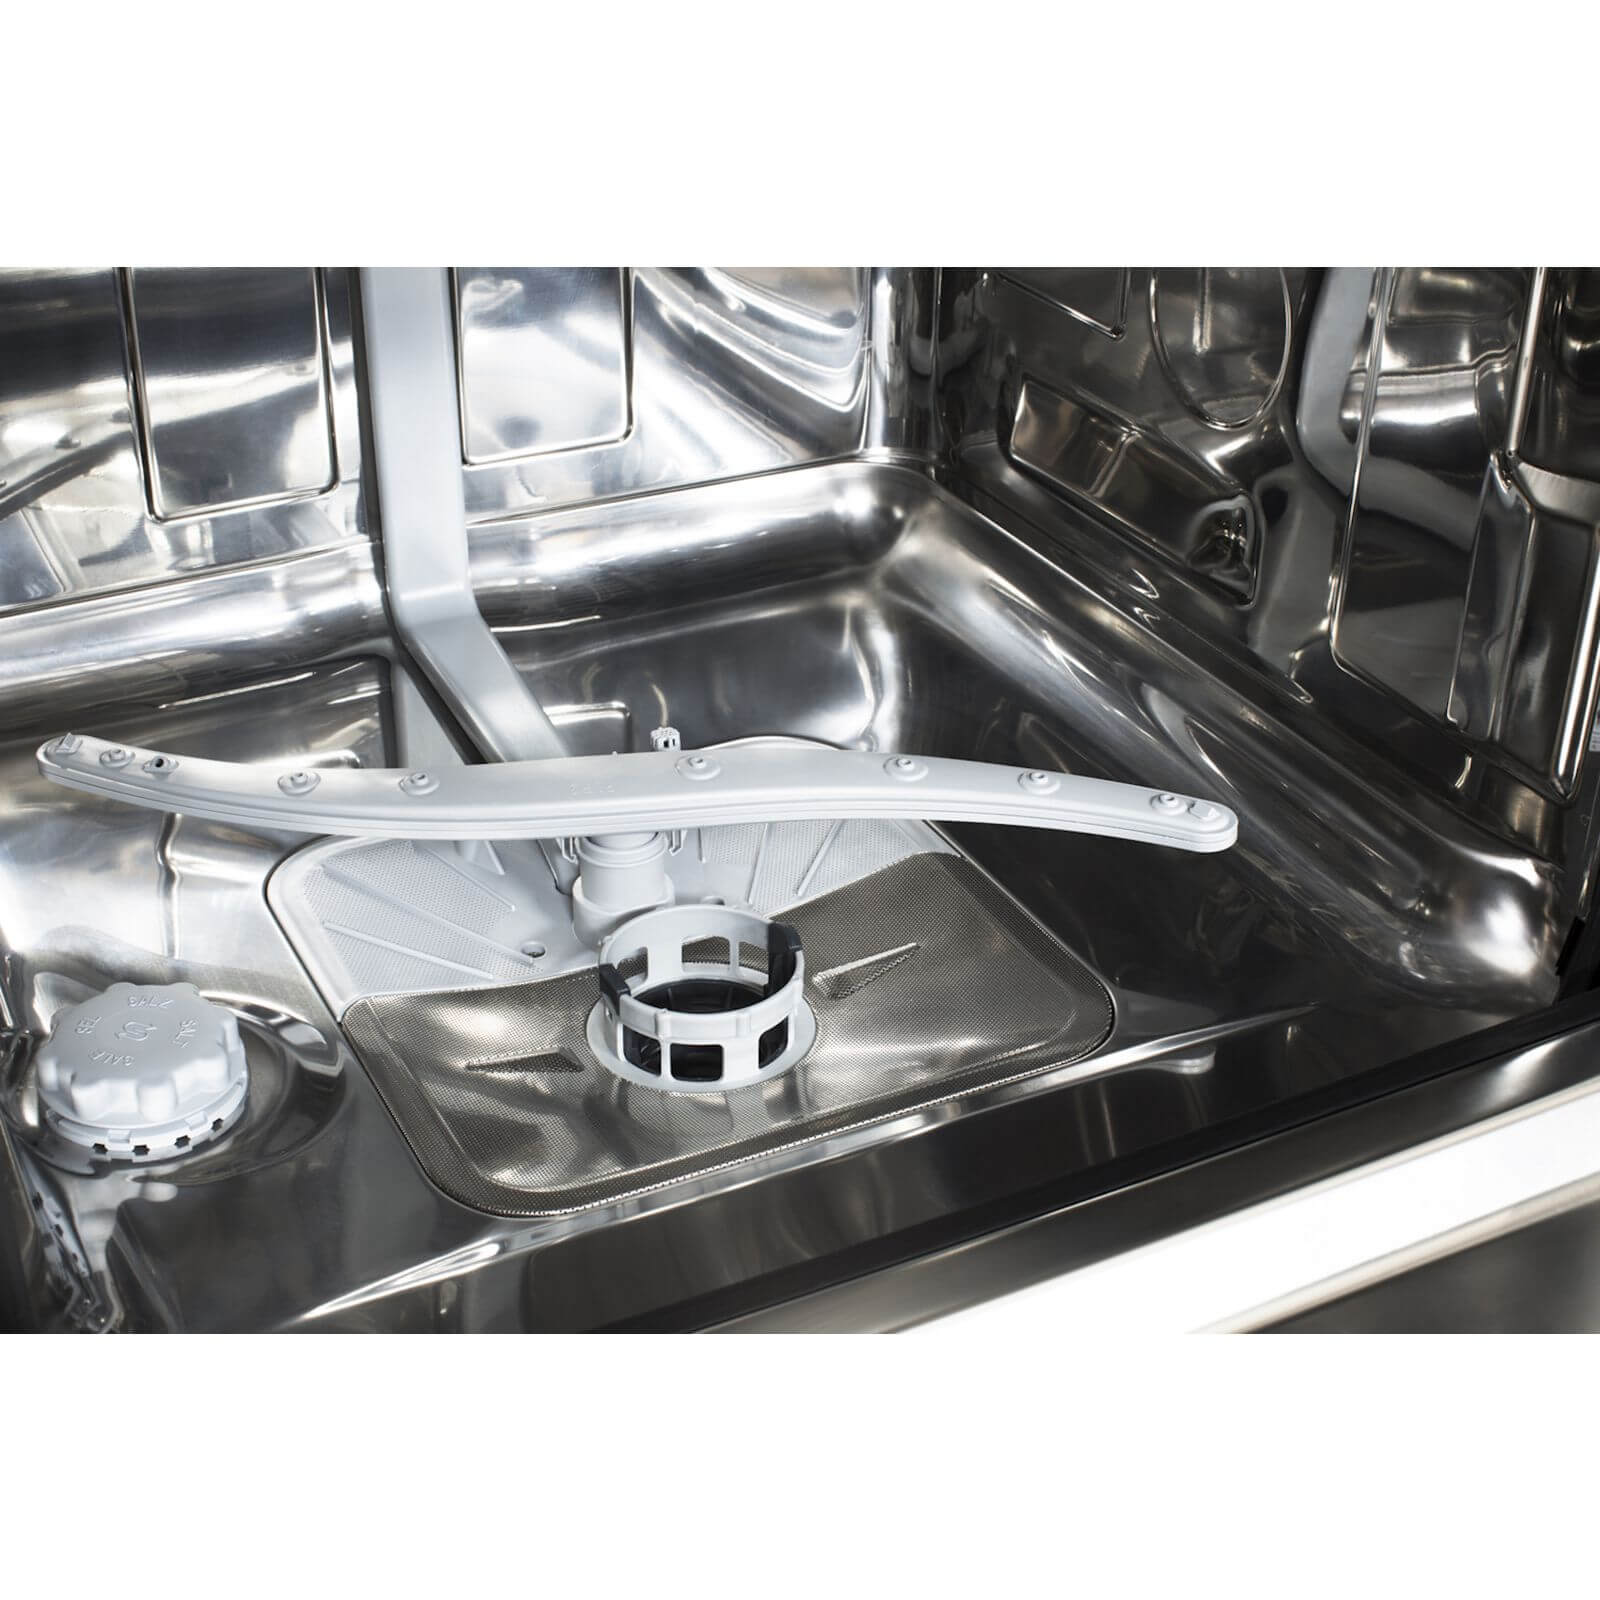 Indesit Ecotime DPG 15B1 NX Integrated Dishwasher - Silver